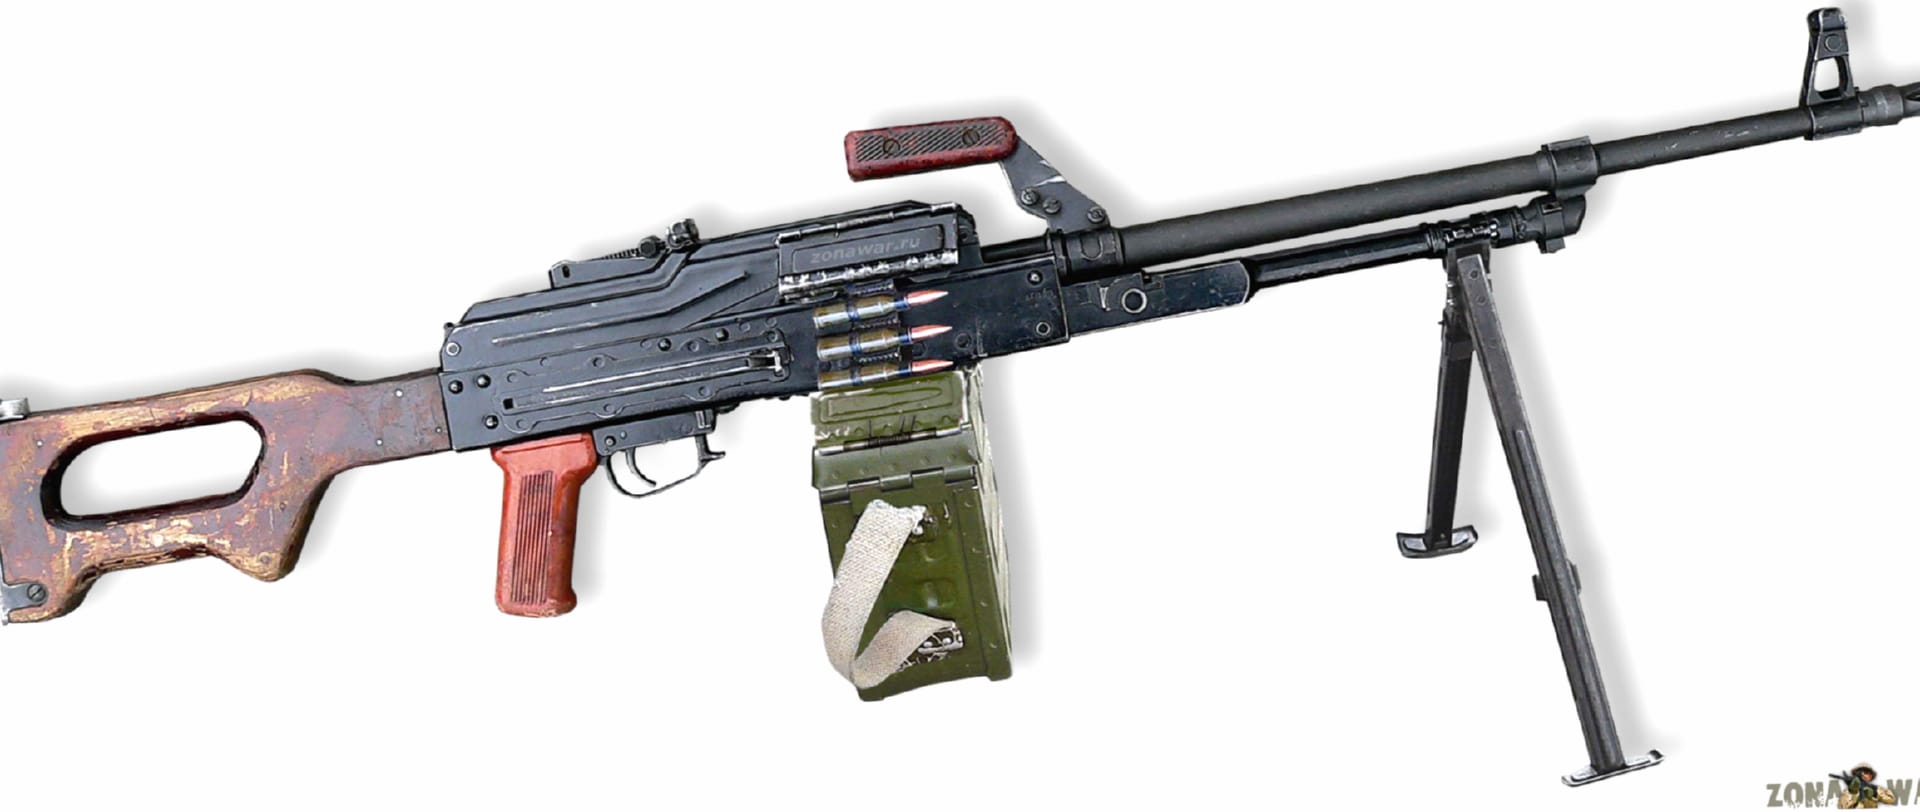 Kalashnikov Pk Rifle at 1334 x 750 iPhone 7 size wallpapers HD quality